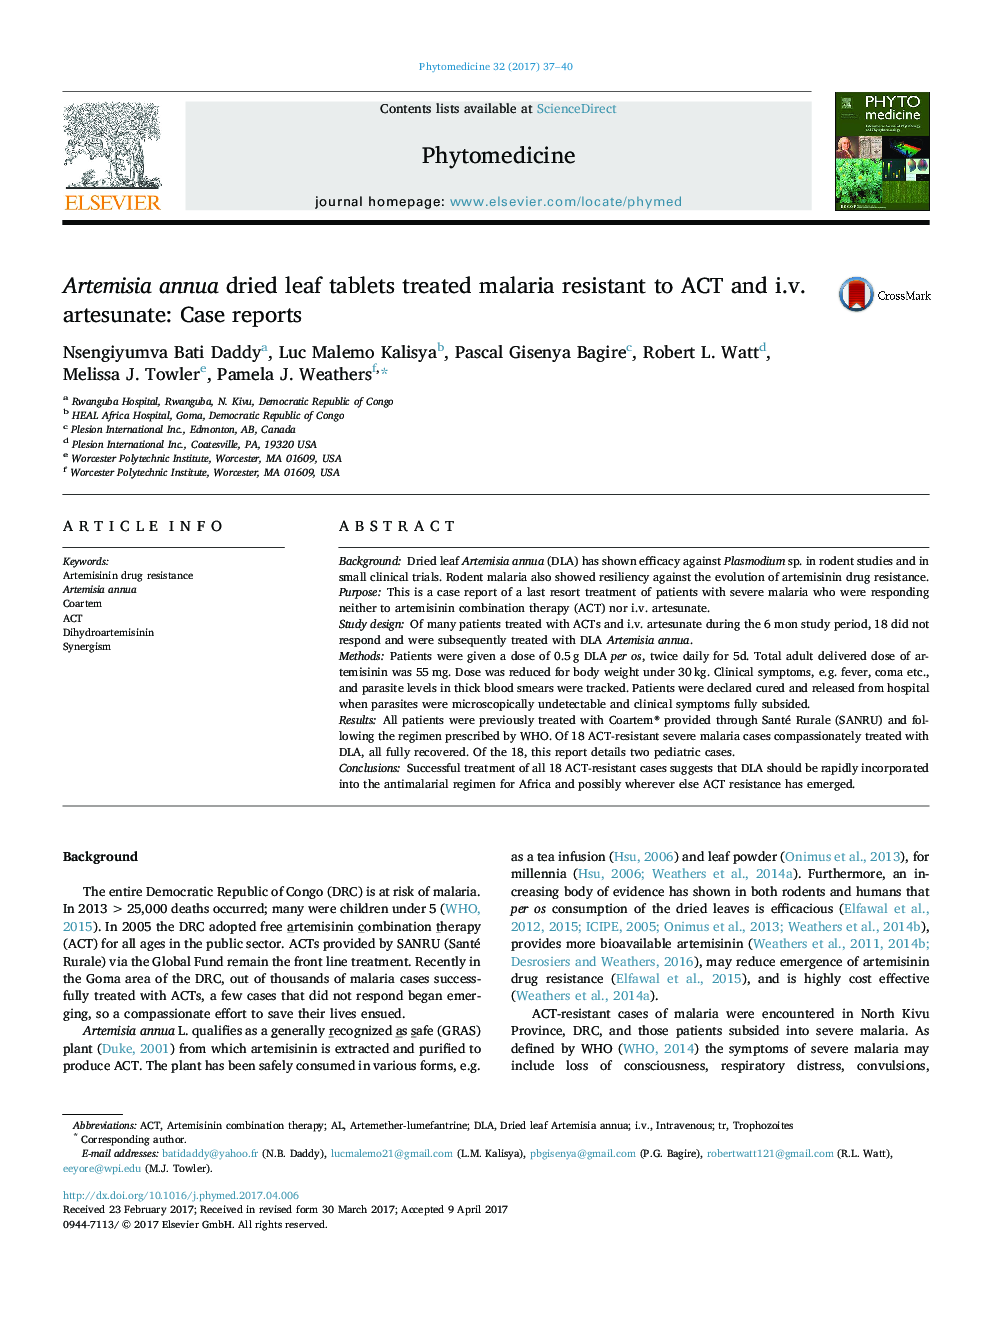 Artemisia annua dried leaf tablets treated malaria resistant to ACT and i.v. artesunate: Case reports